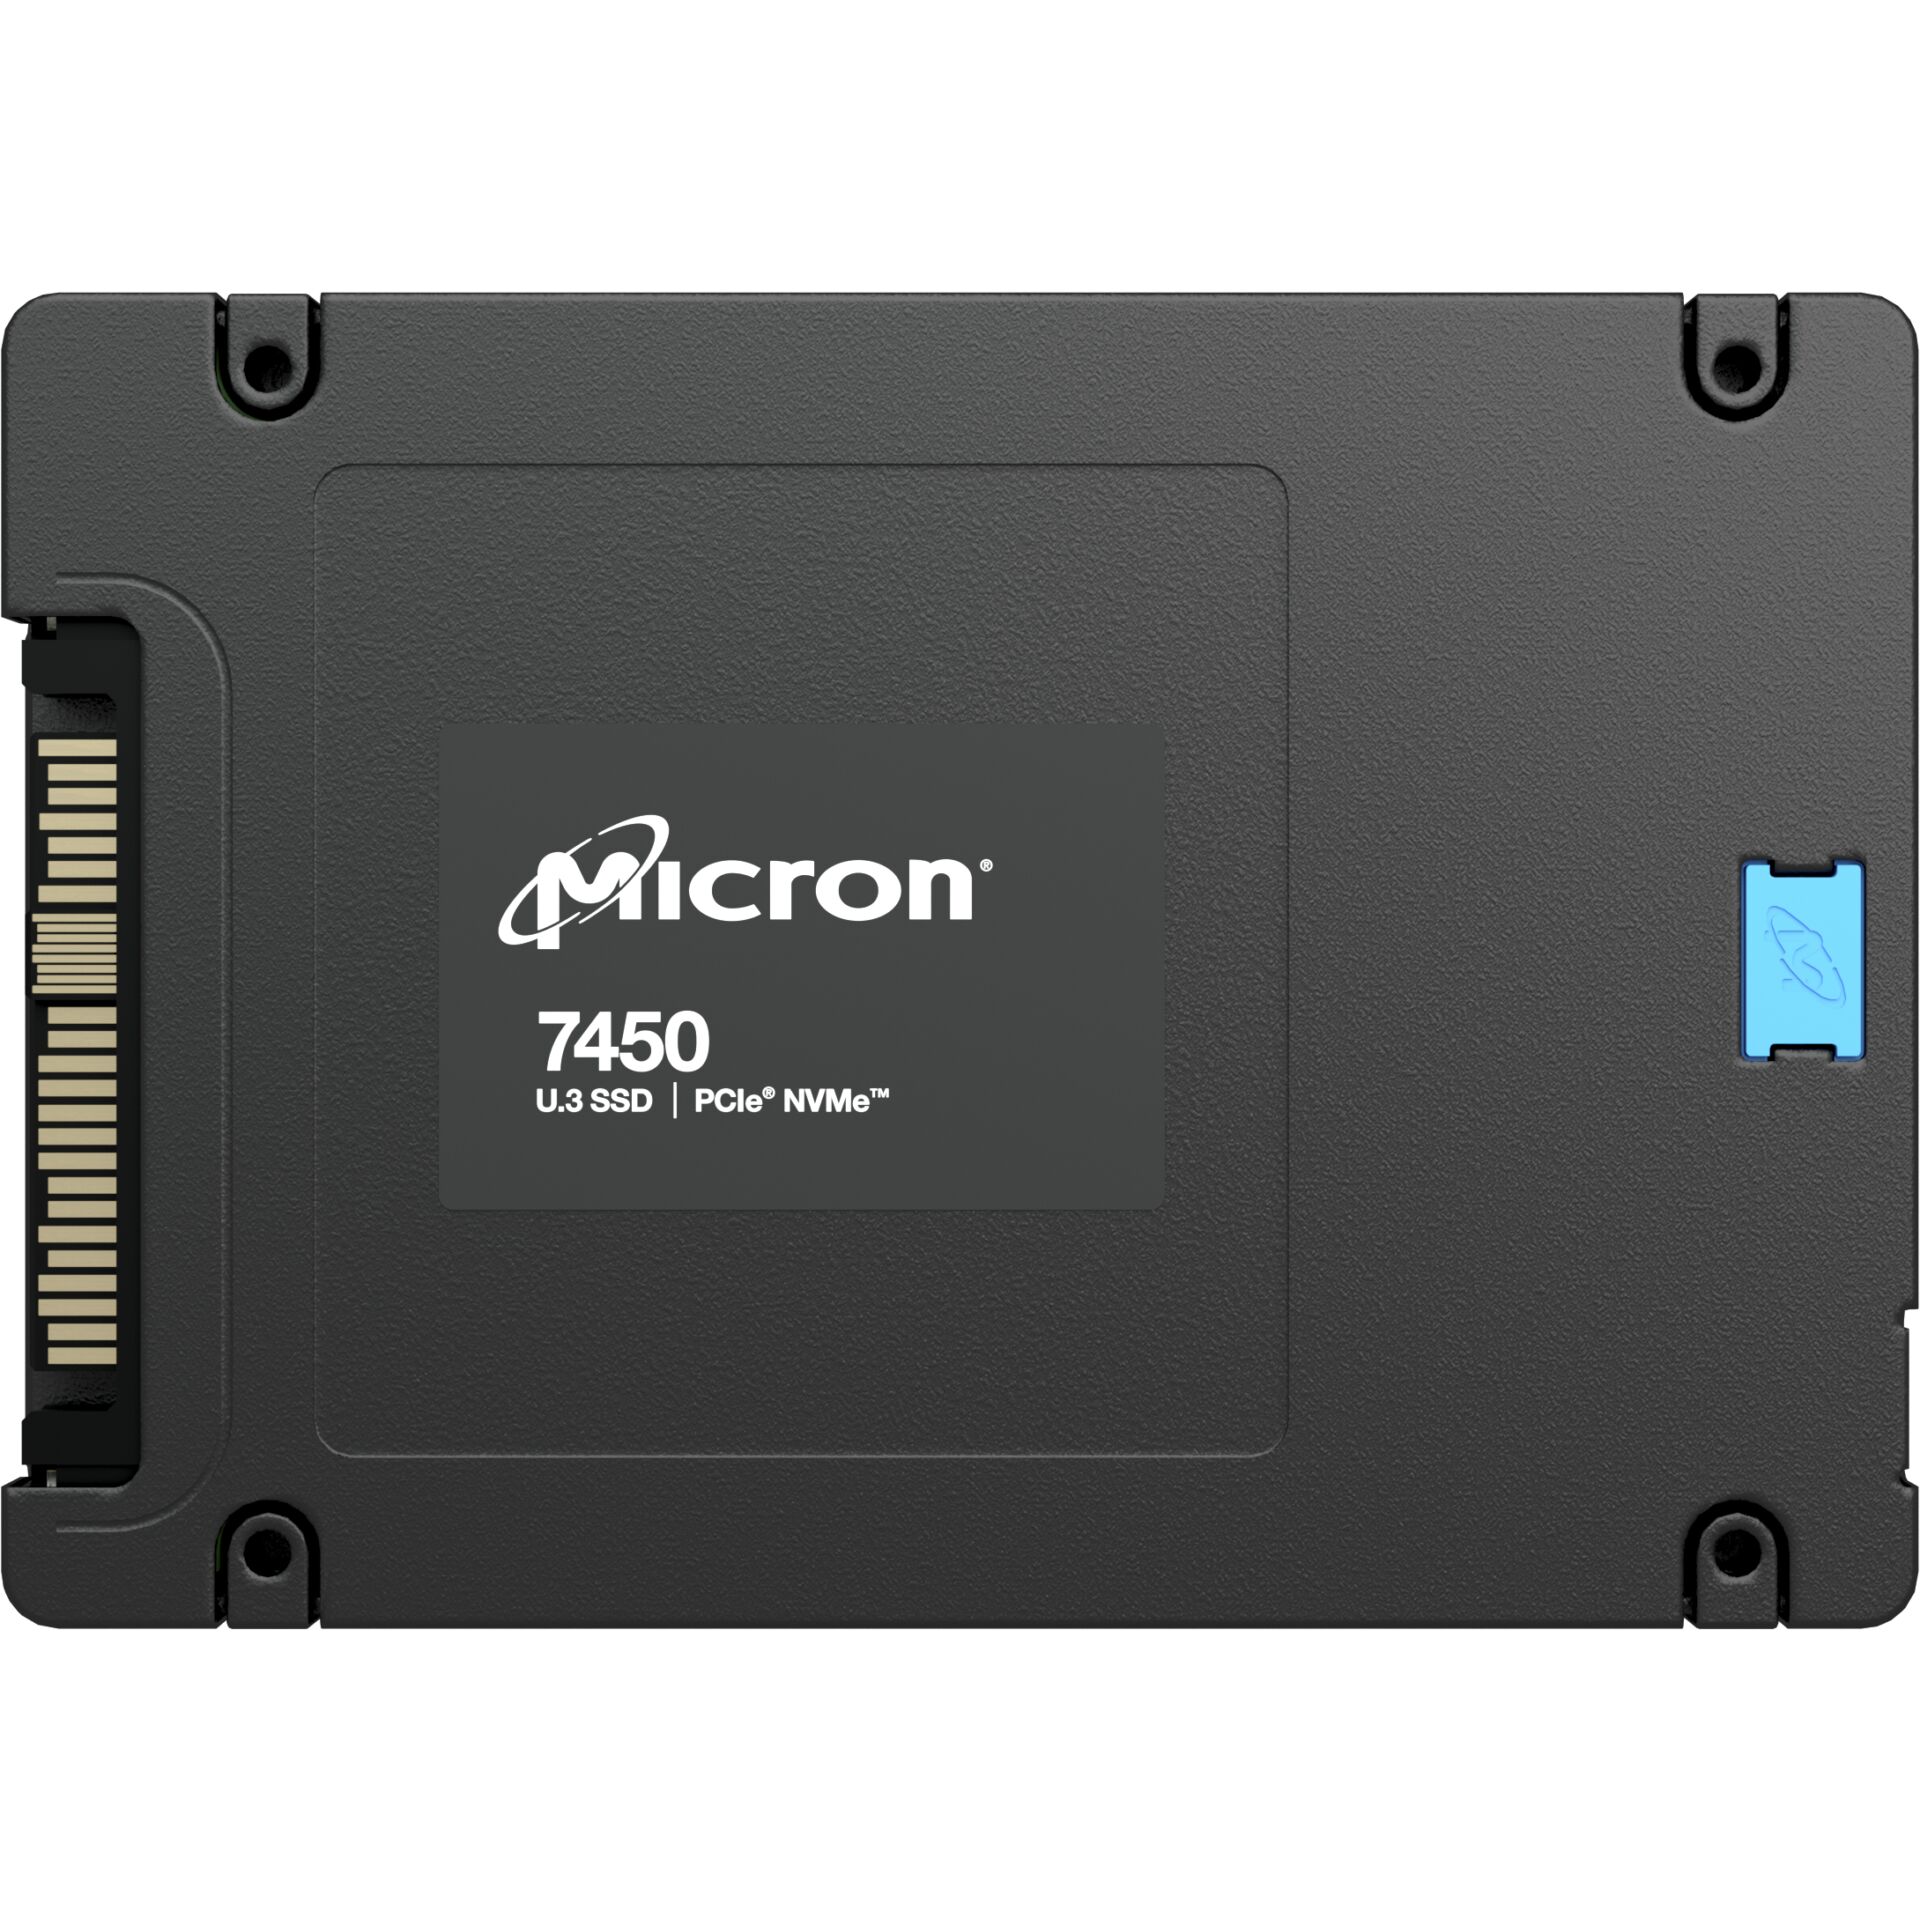 6400GB Micron 7400 MAX U.3 NVMe Non SED Enterprise SSD